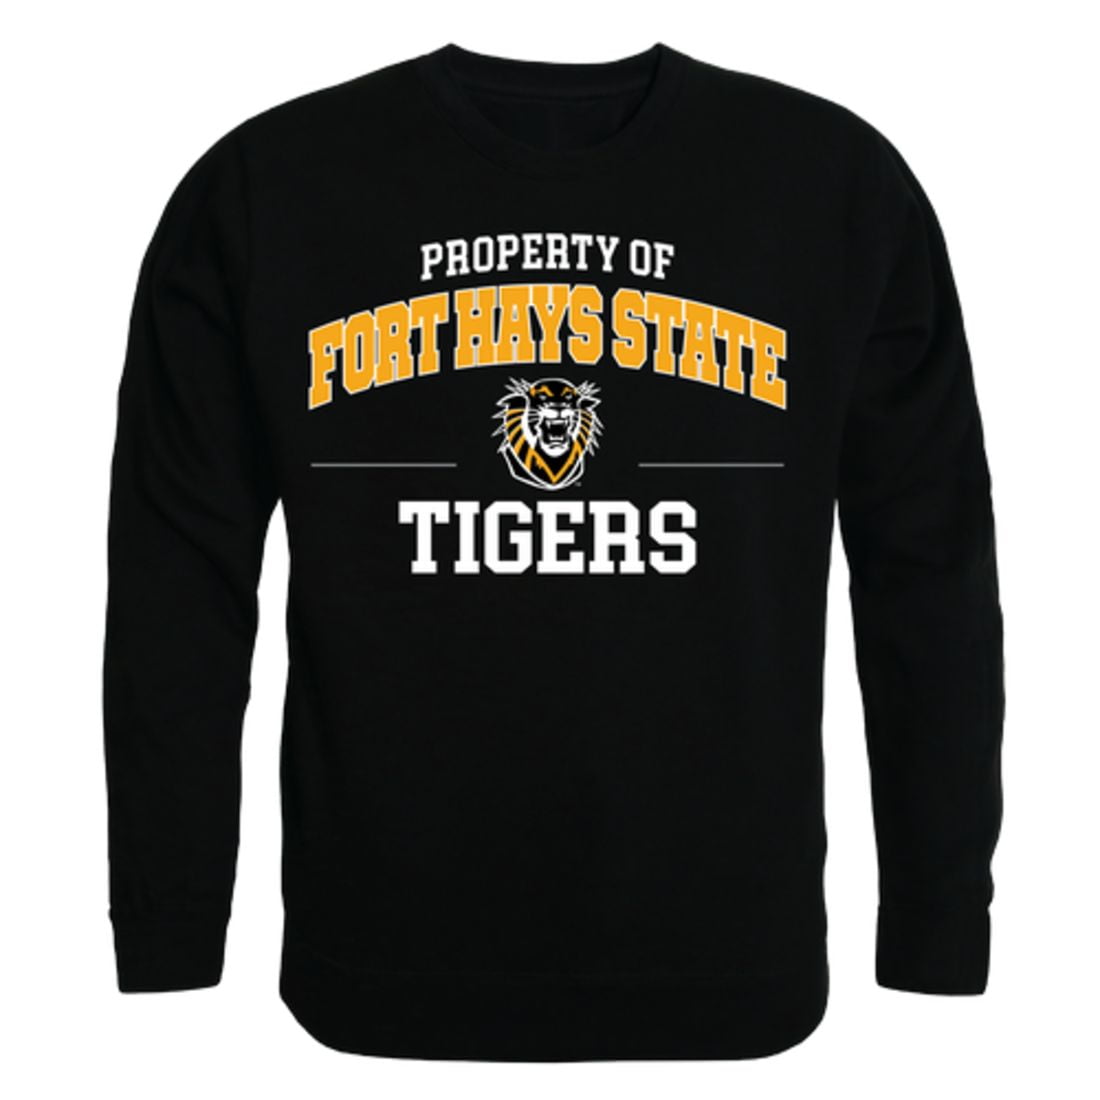 Fhsu Fort Hays State University Tigers Property Crewneck Pullover Sweatshirt Sweater Black Small - Walmart.com